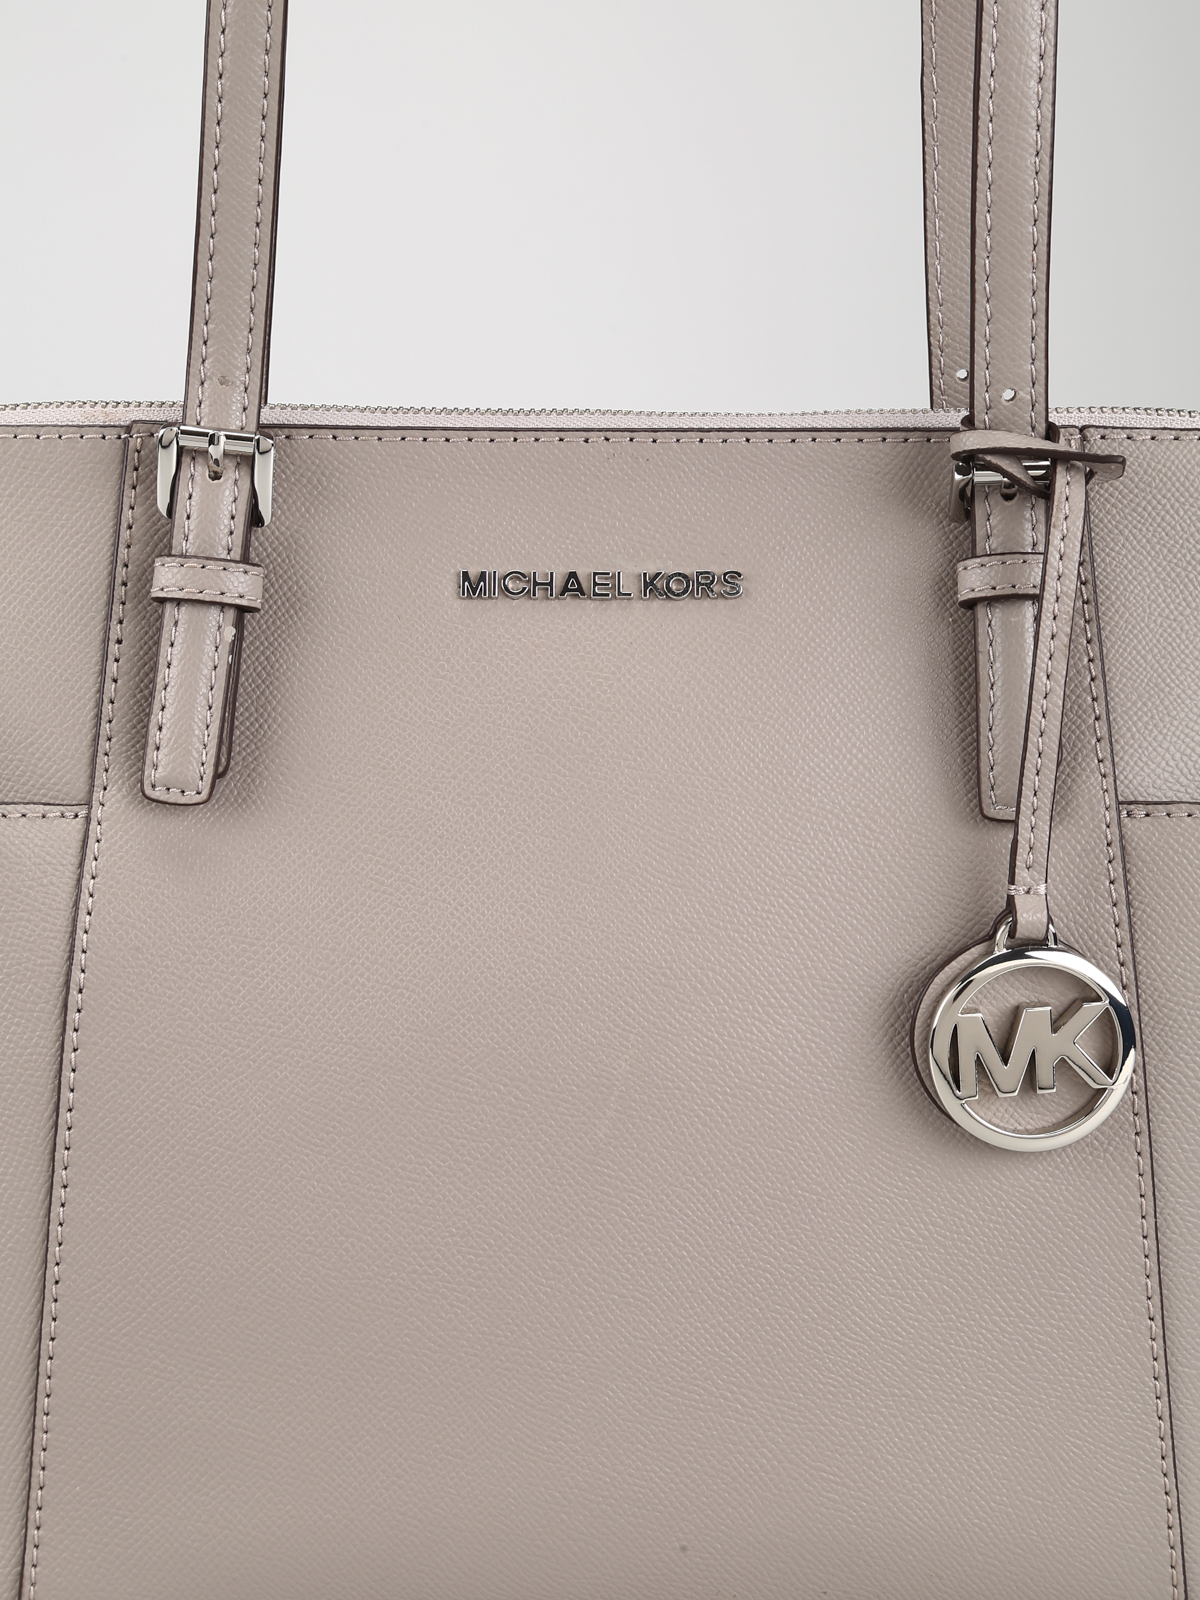 Totes bags Michael Kors - Jet Set top zip pearl grey leather tote -  30F2STTT8L081